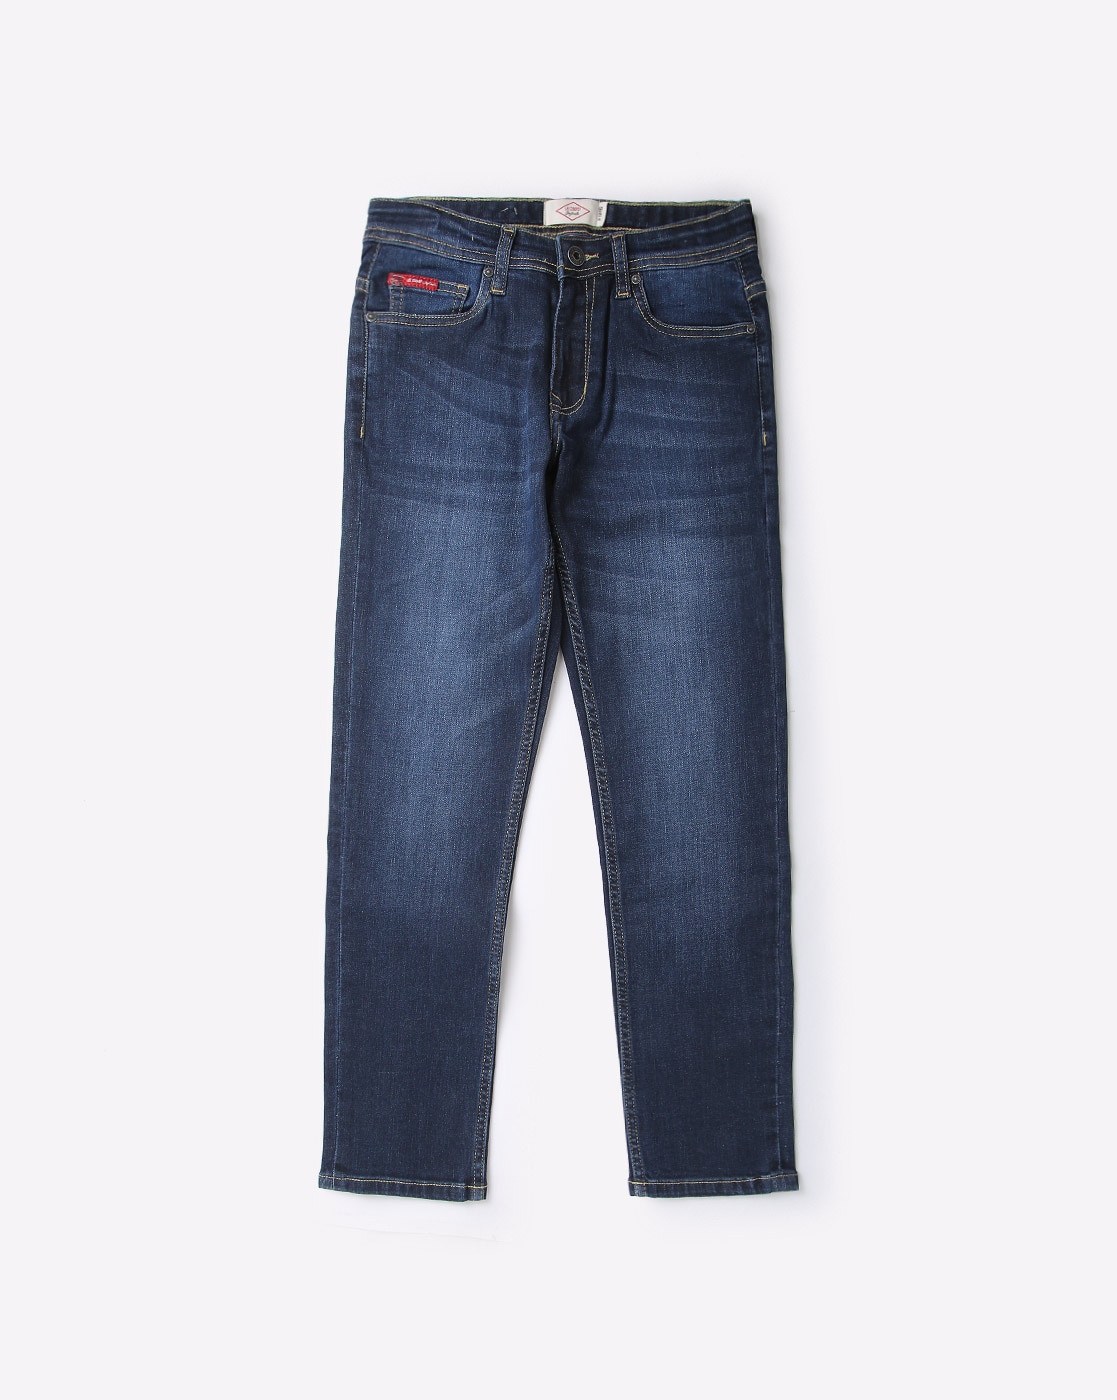 Lee Cooper, Straight, Men's Denim Blue Jeans, Size W29” X L30” | eBay